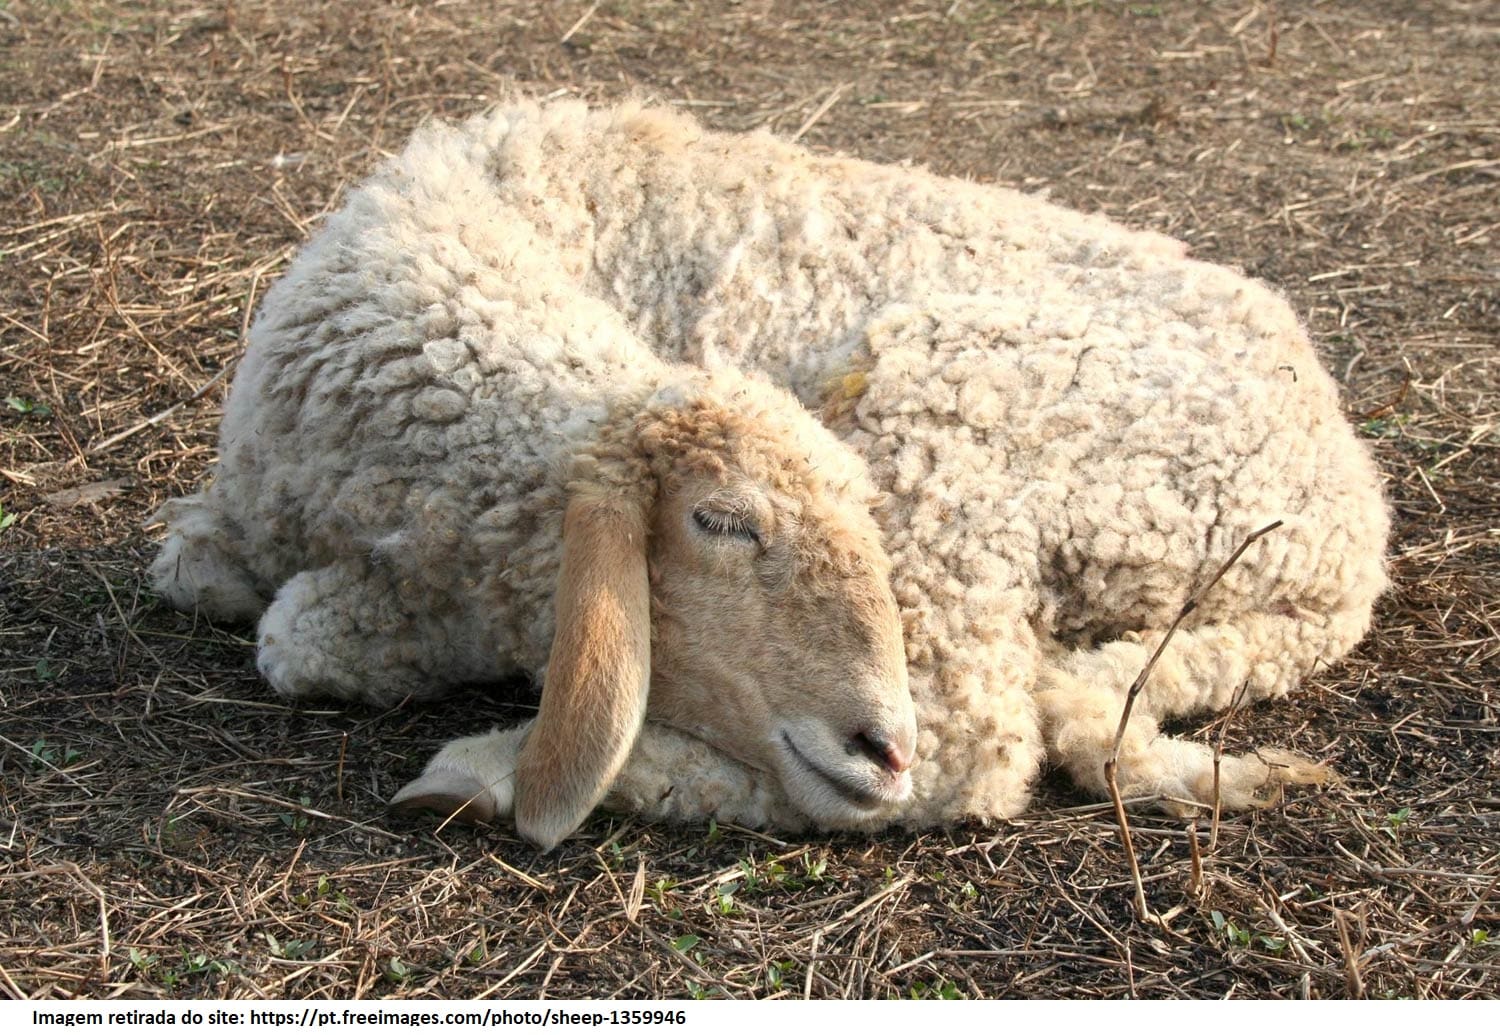 Rascunhos da Vida: A porta das ovelhas